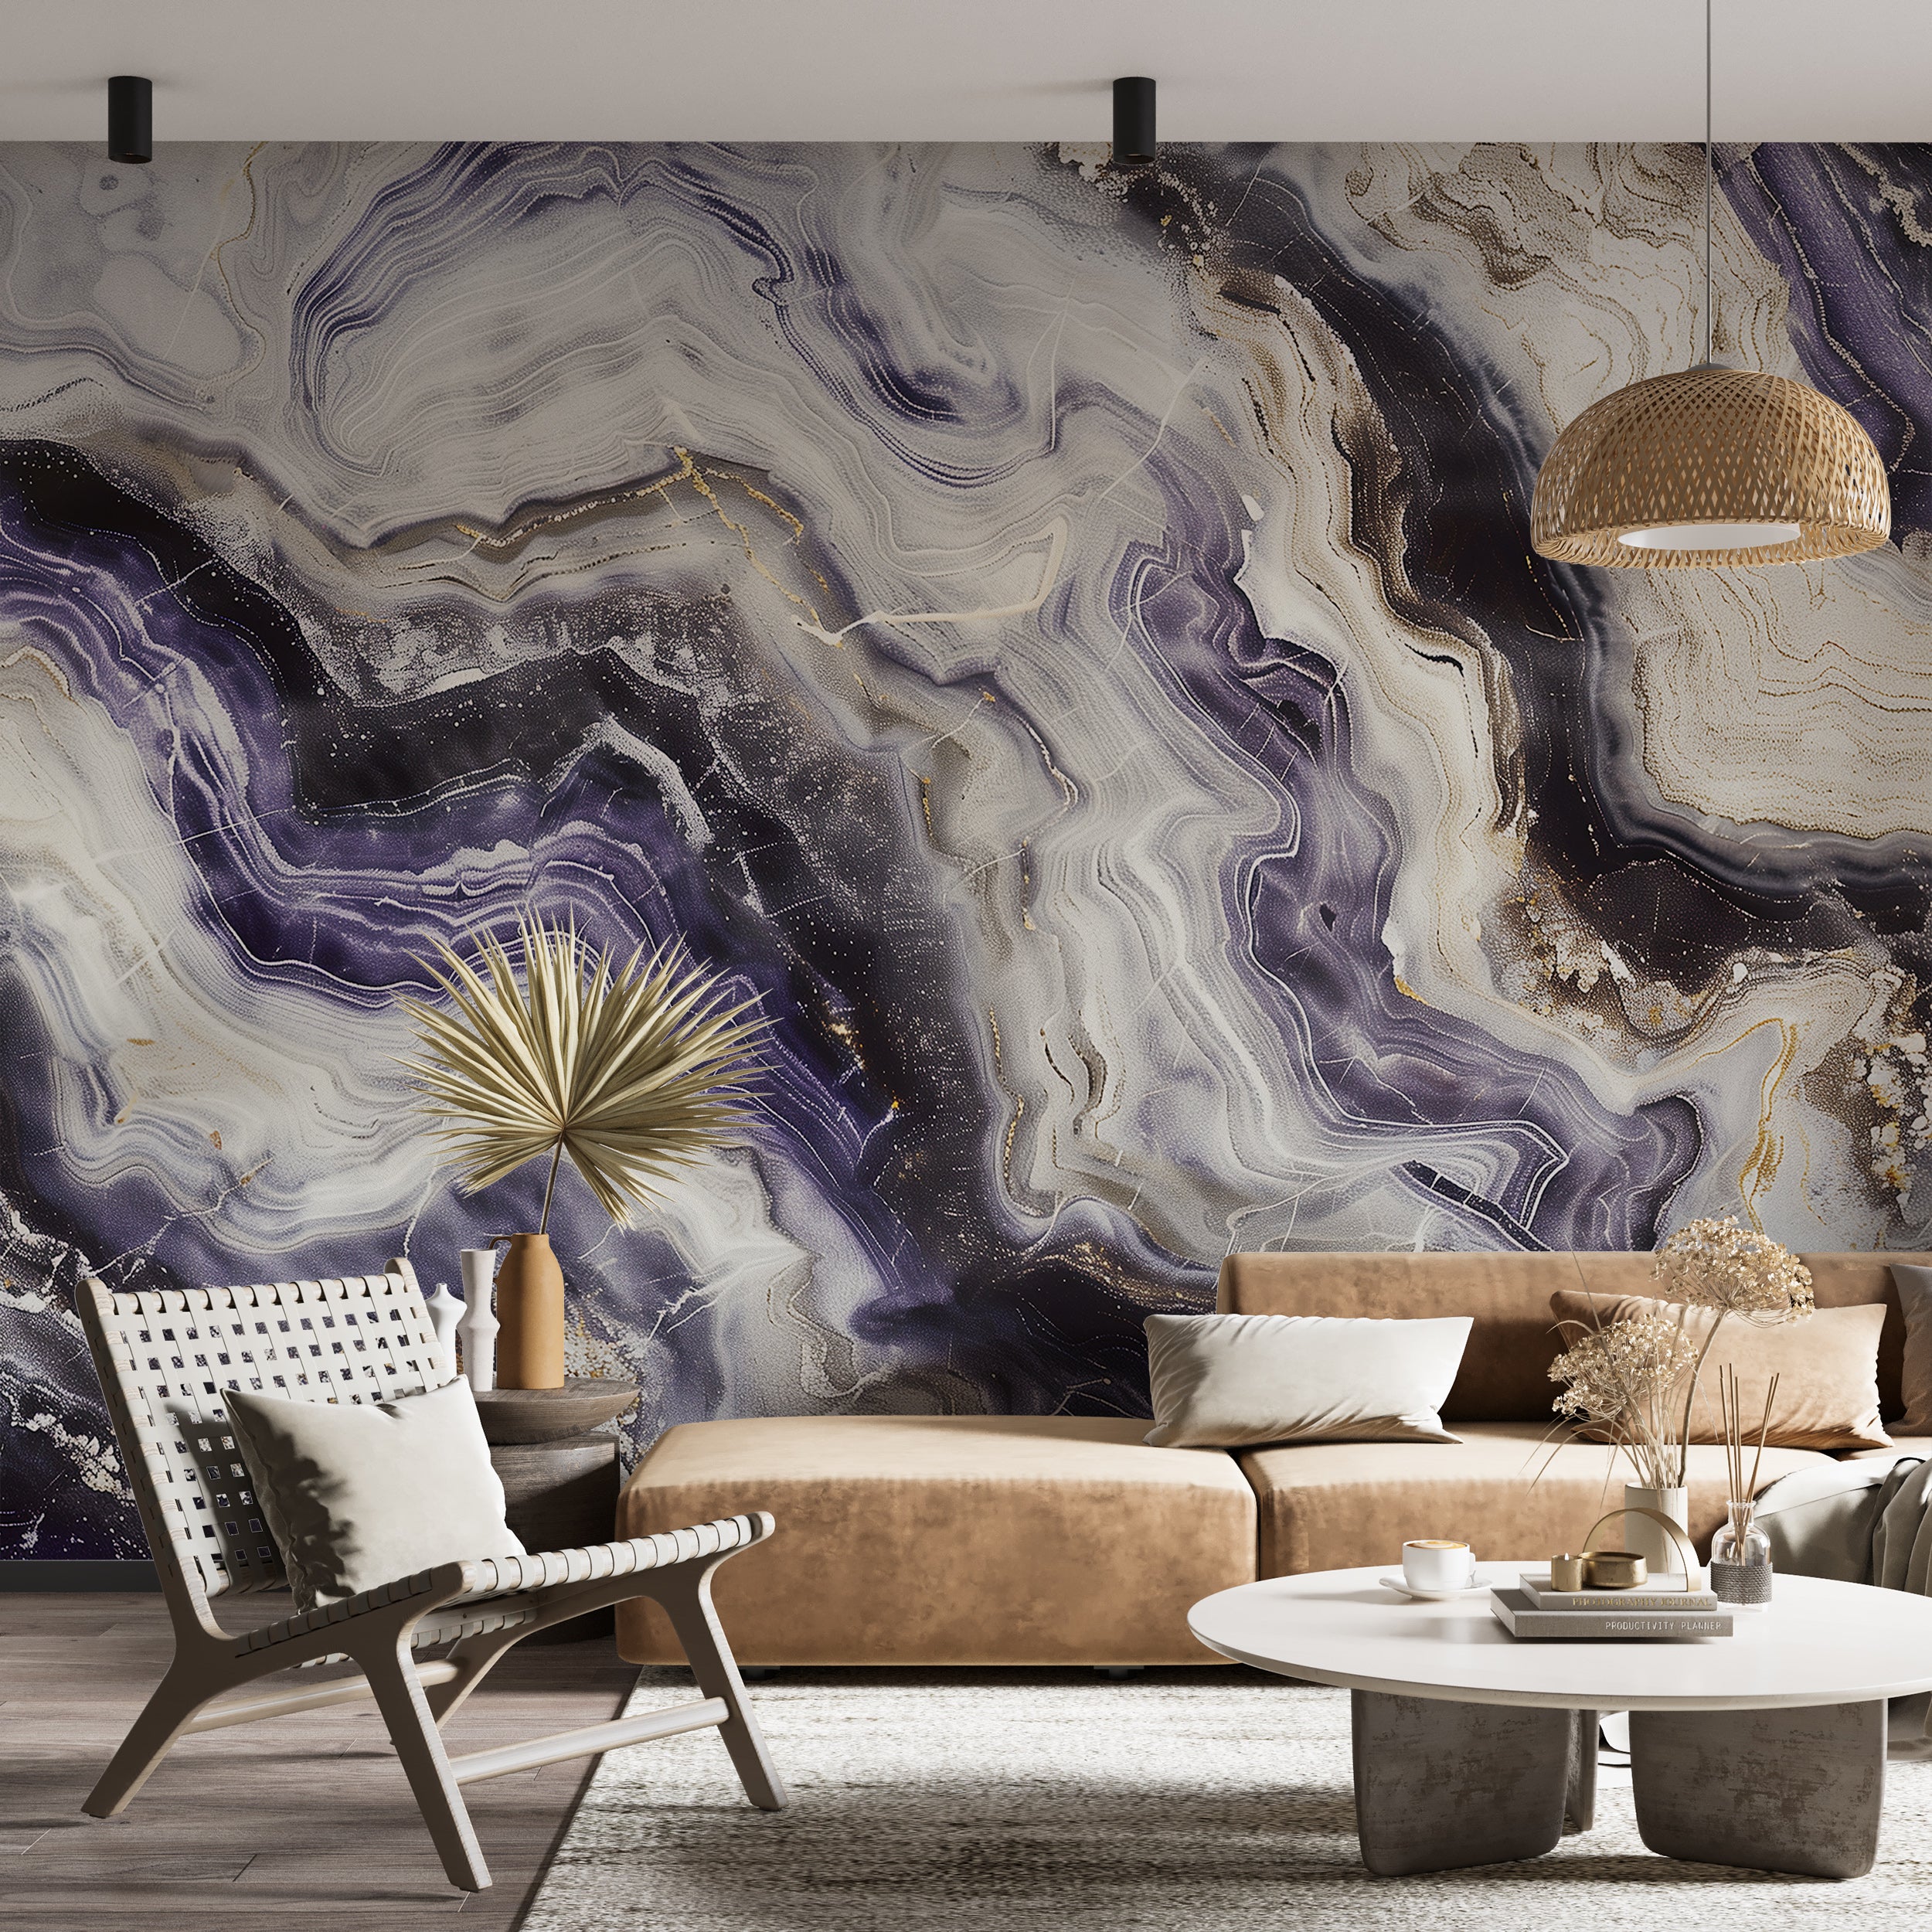 Self-adhesive marble wall art